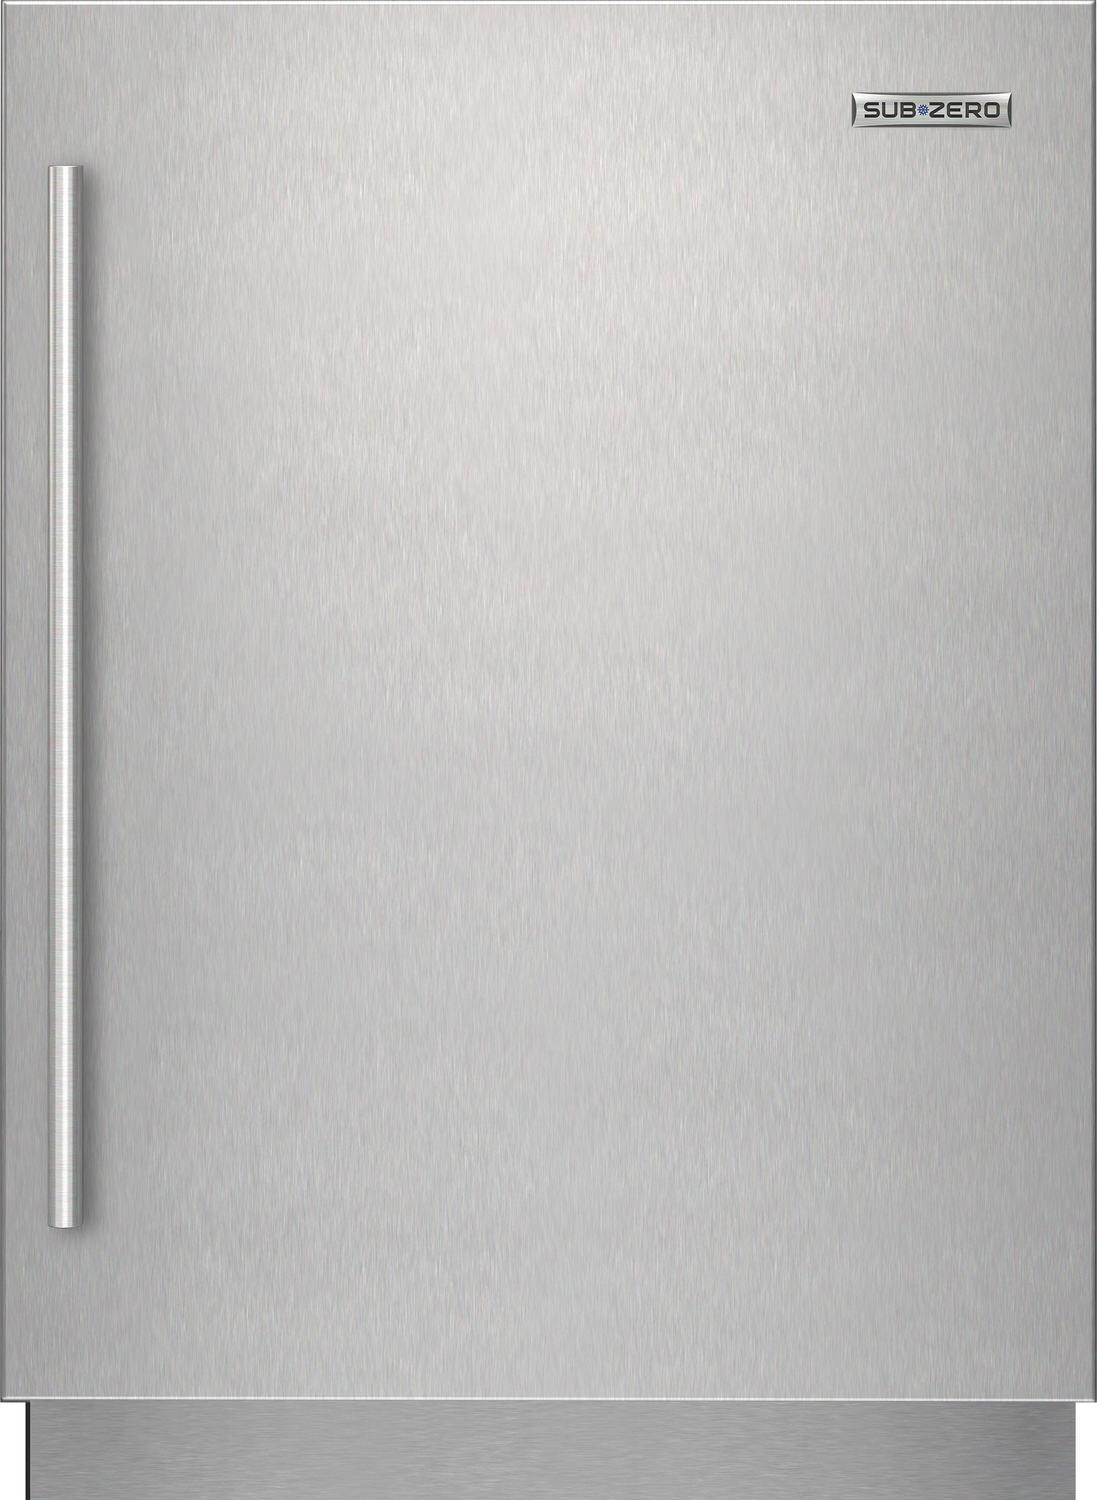 Sub-Zero 9029035 Stainless Steel Solid Door Panel - Tubular Handle, Right Hinge